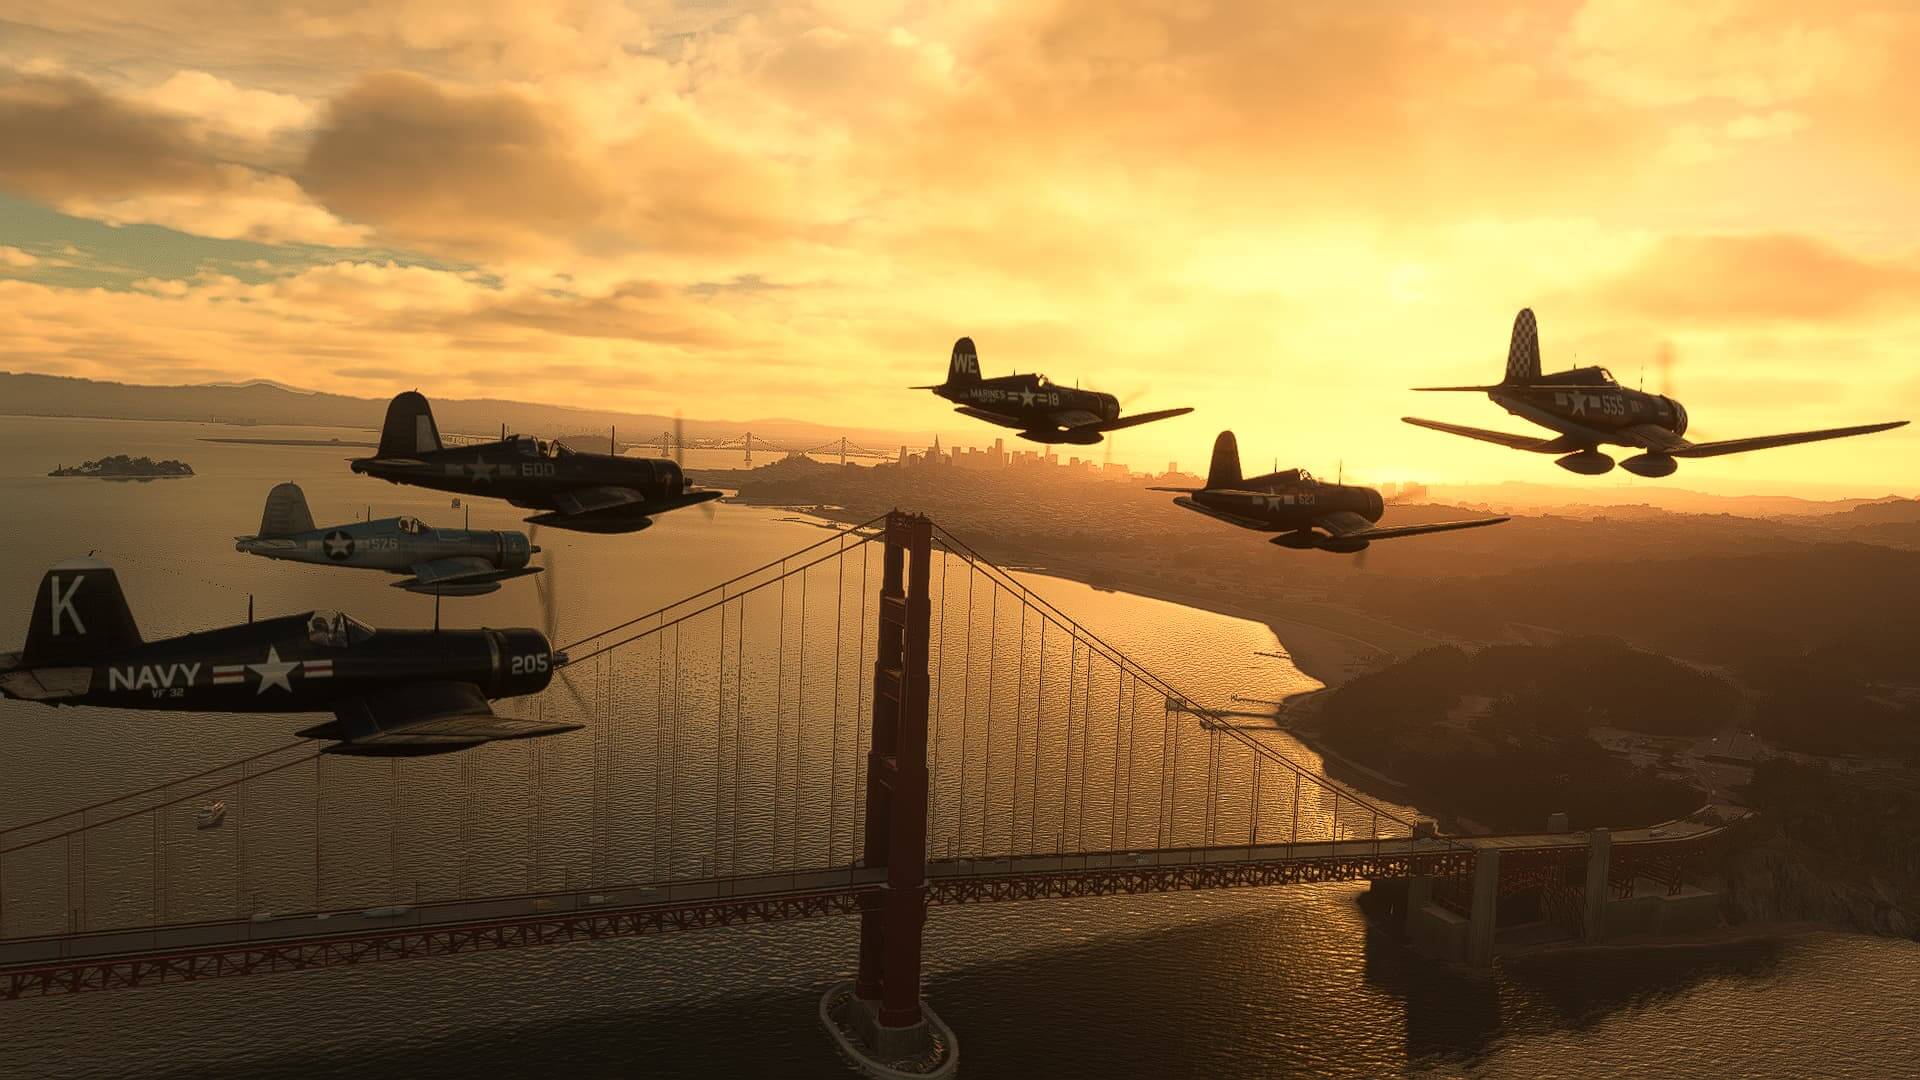 A group flight of warbirds passes over the Golden Gate Bridge